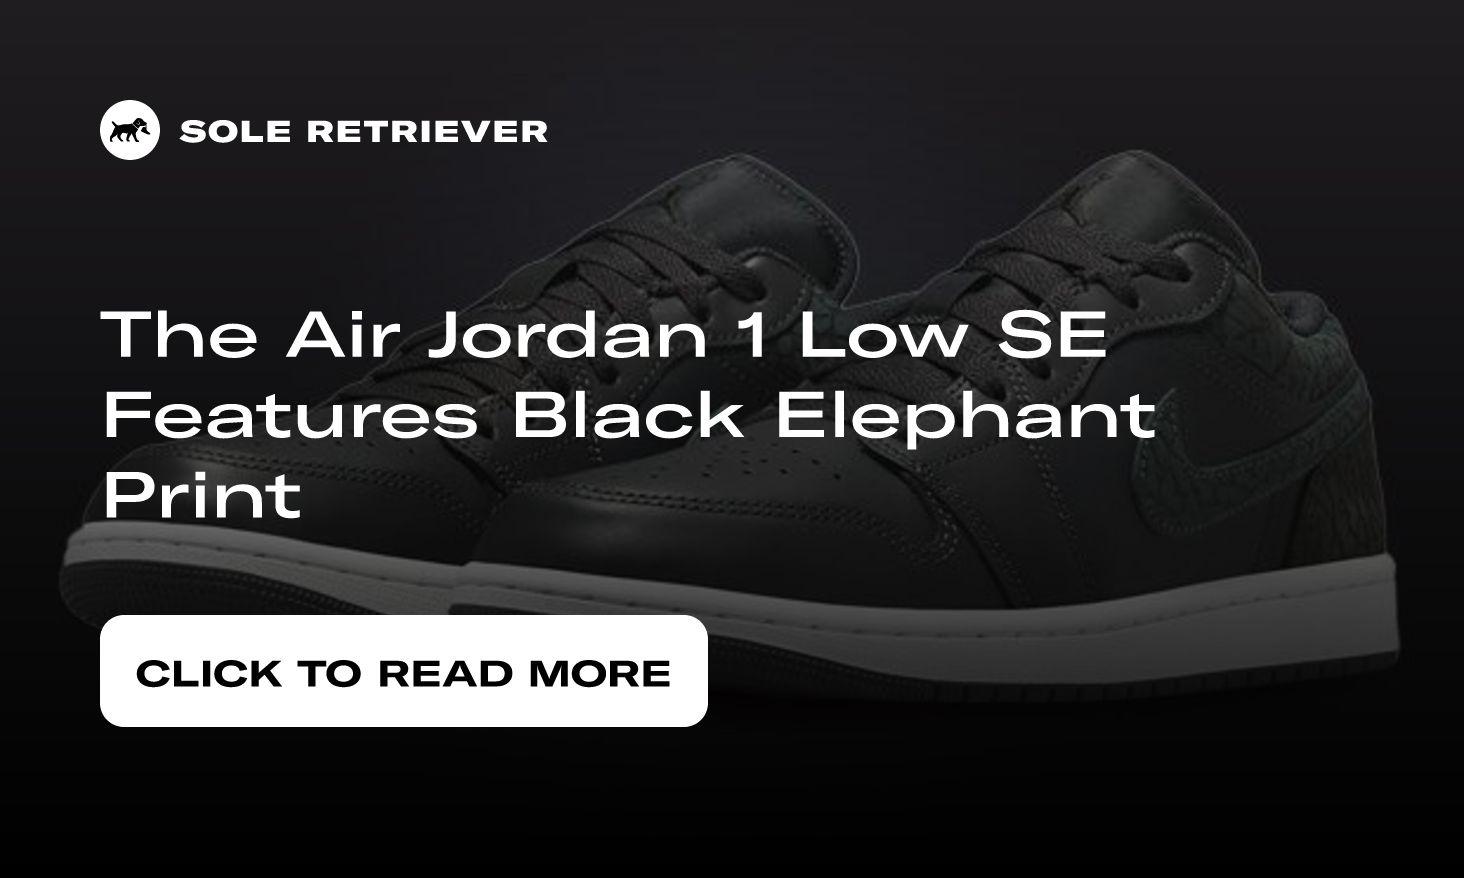 The Air Jordan 1 Low SE Features Black Elephant Print